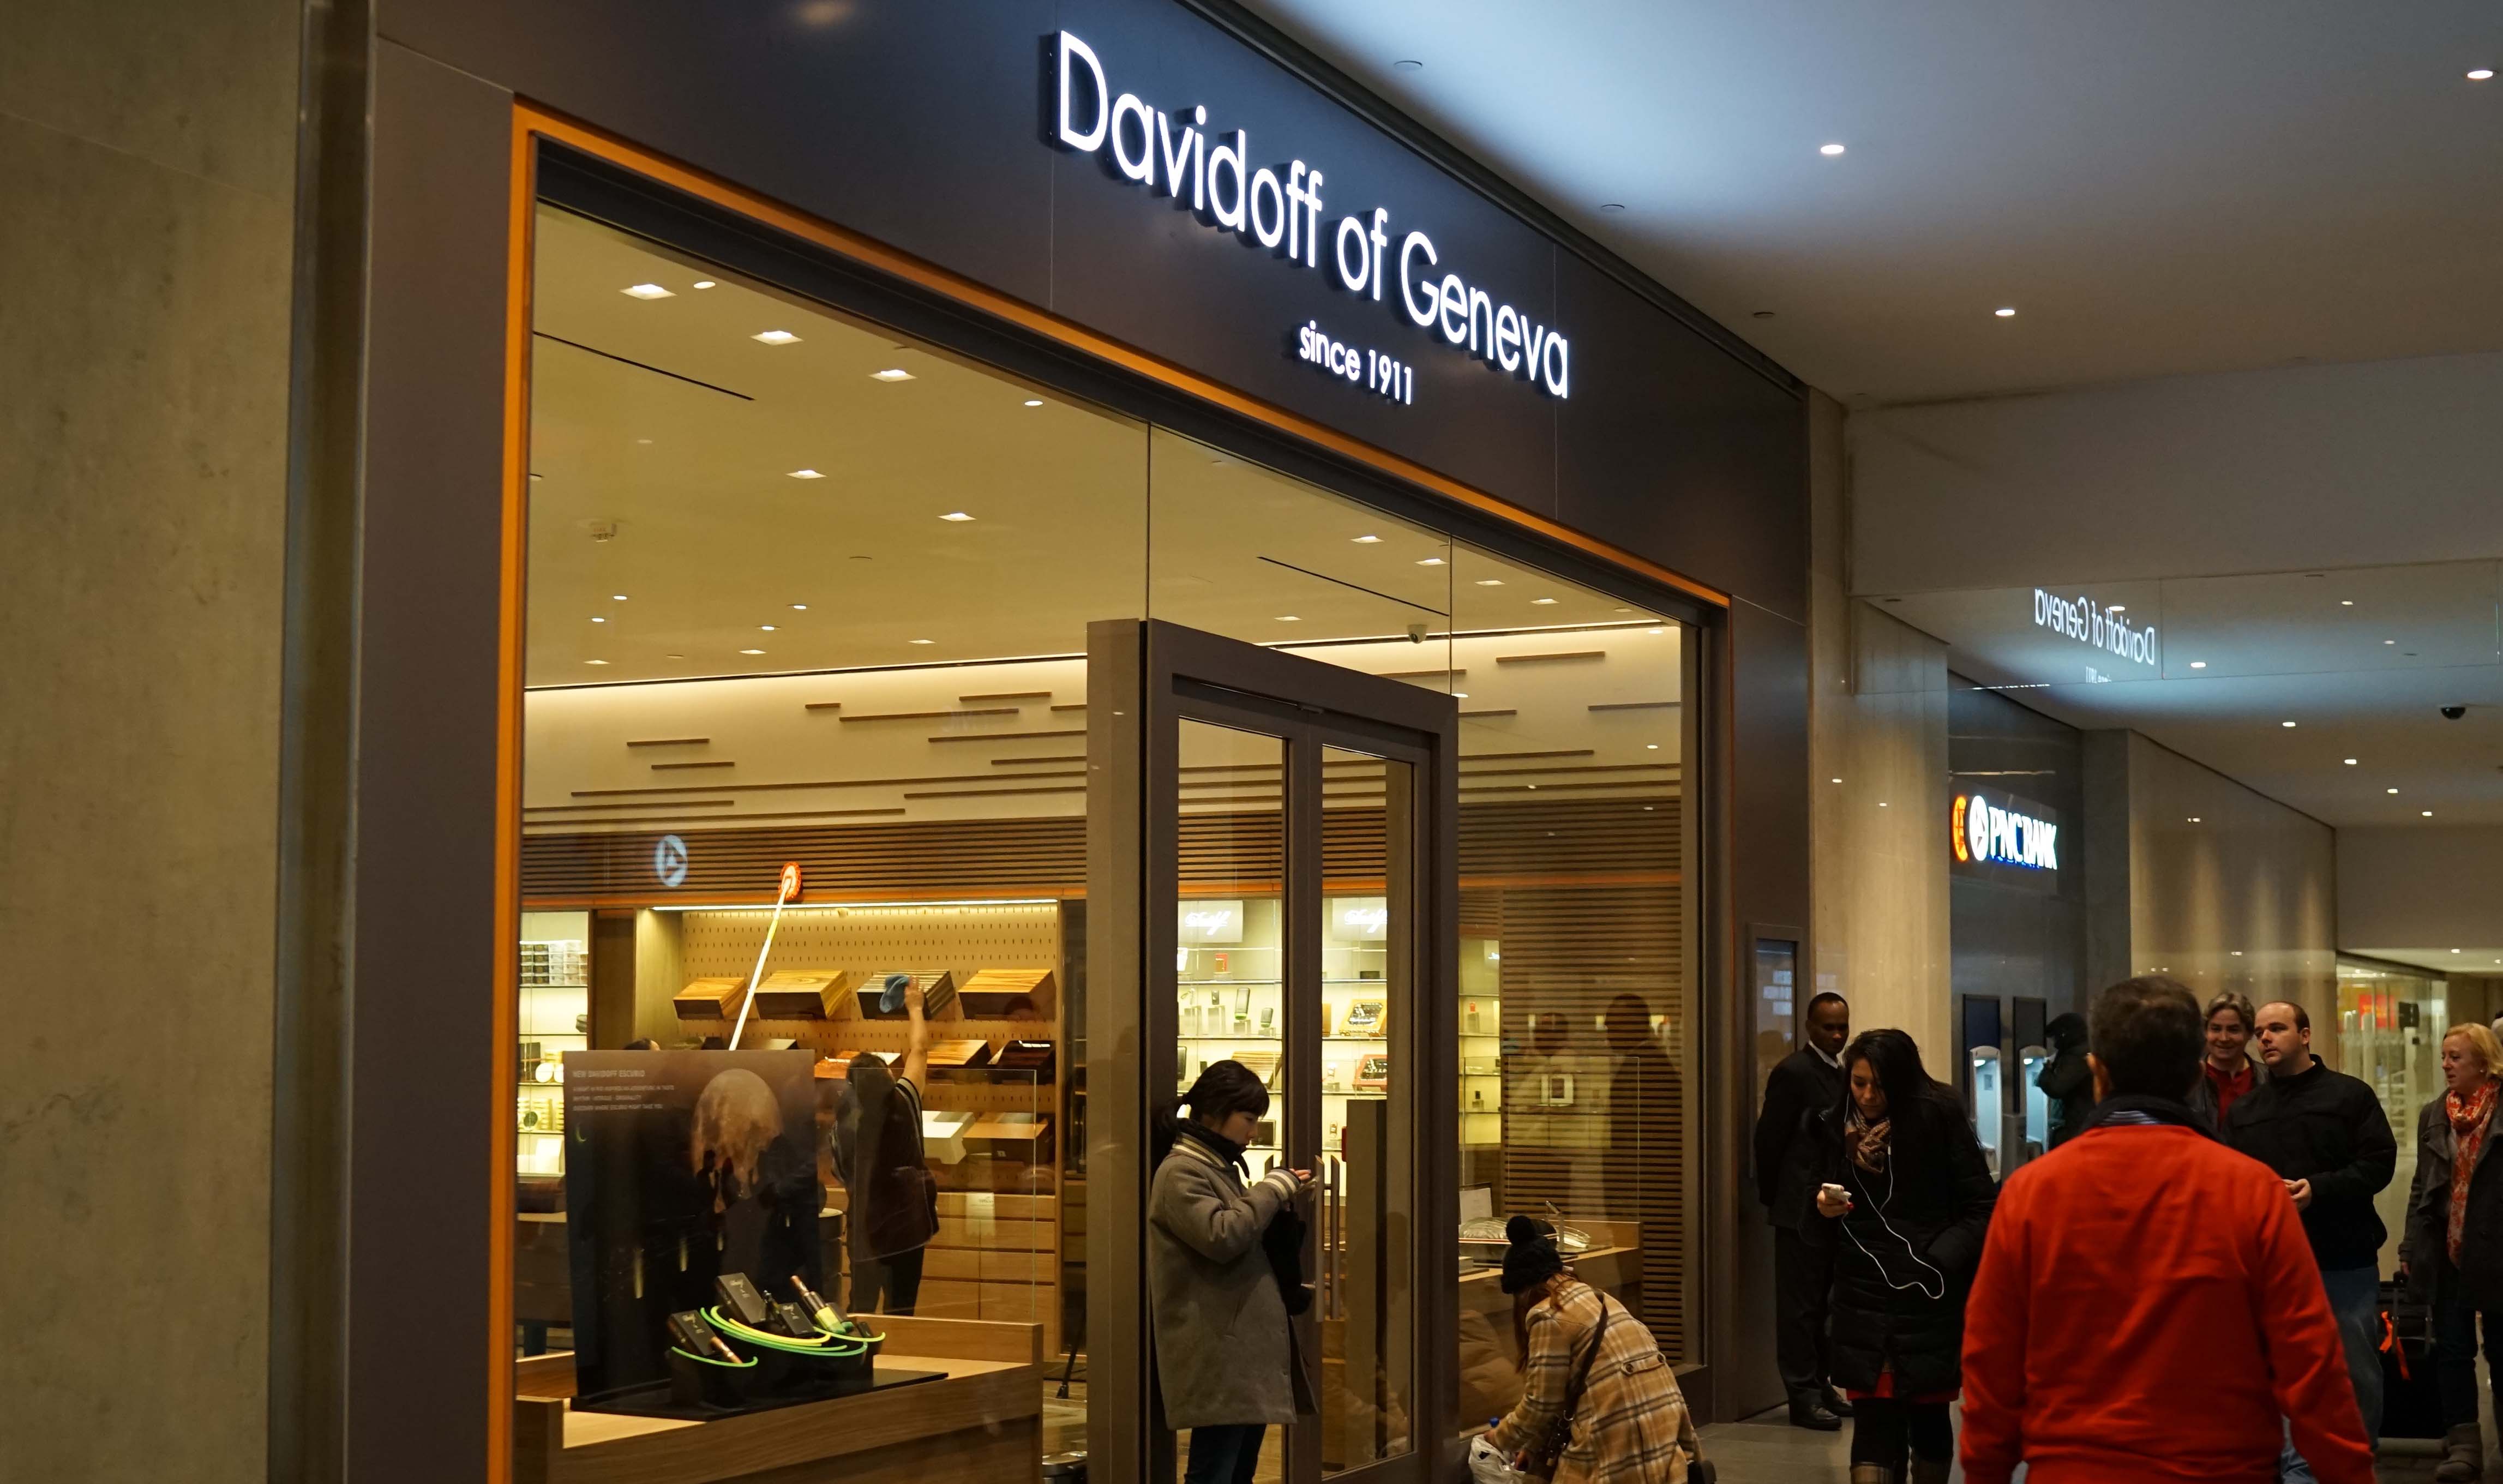 Davidoff of Geneva inside storefront